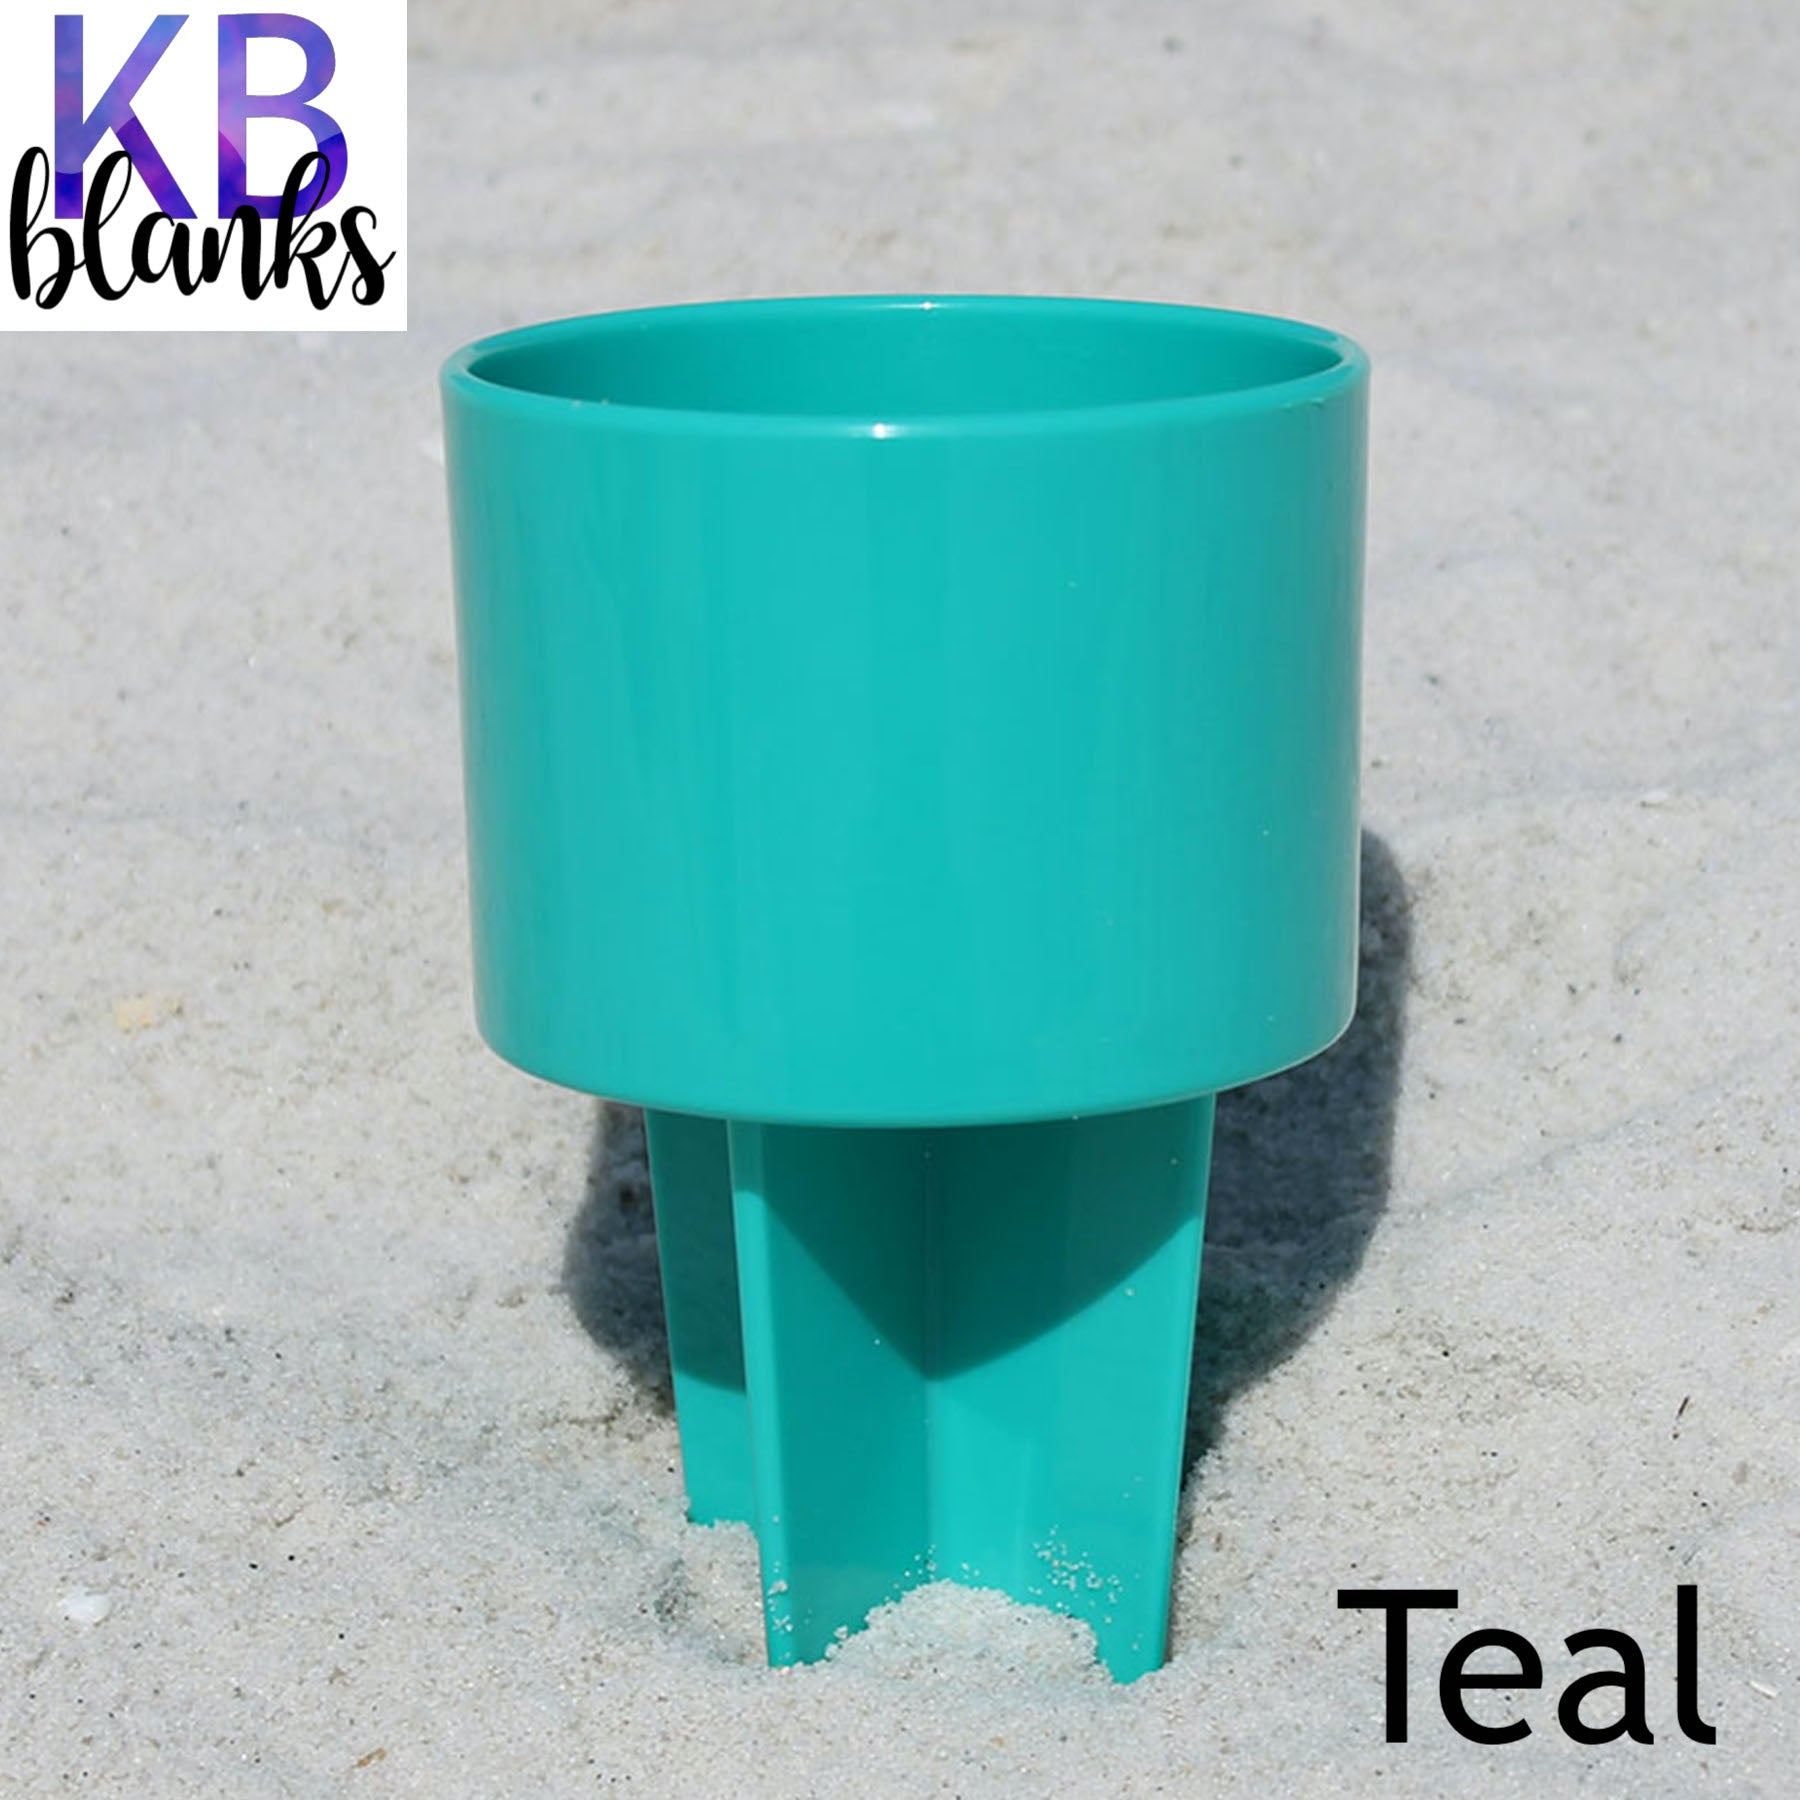  Remagr 4 Pack Beach Cup Holders Sand Drink Holder